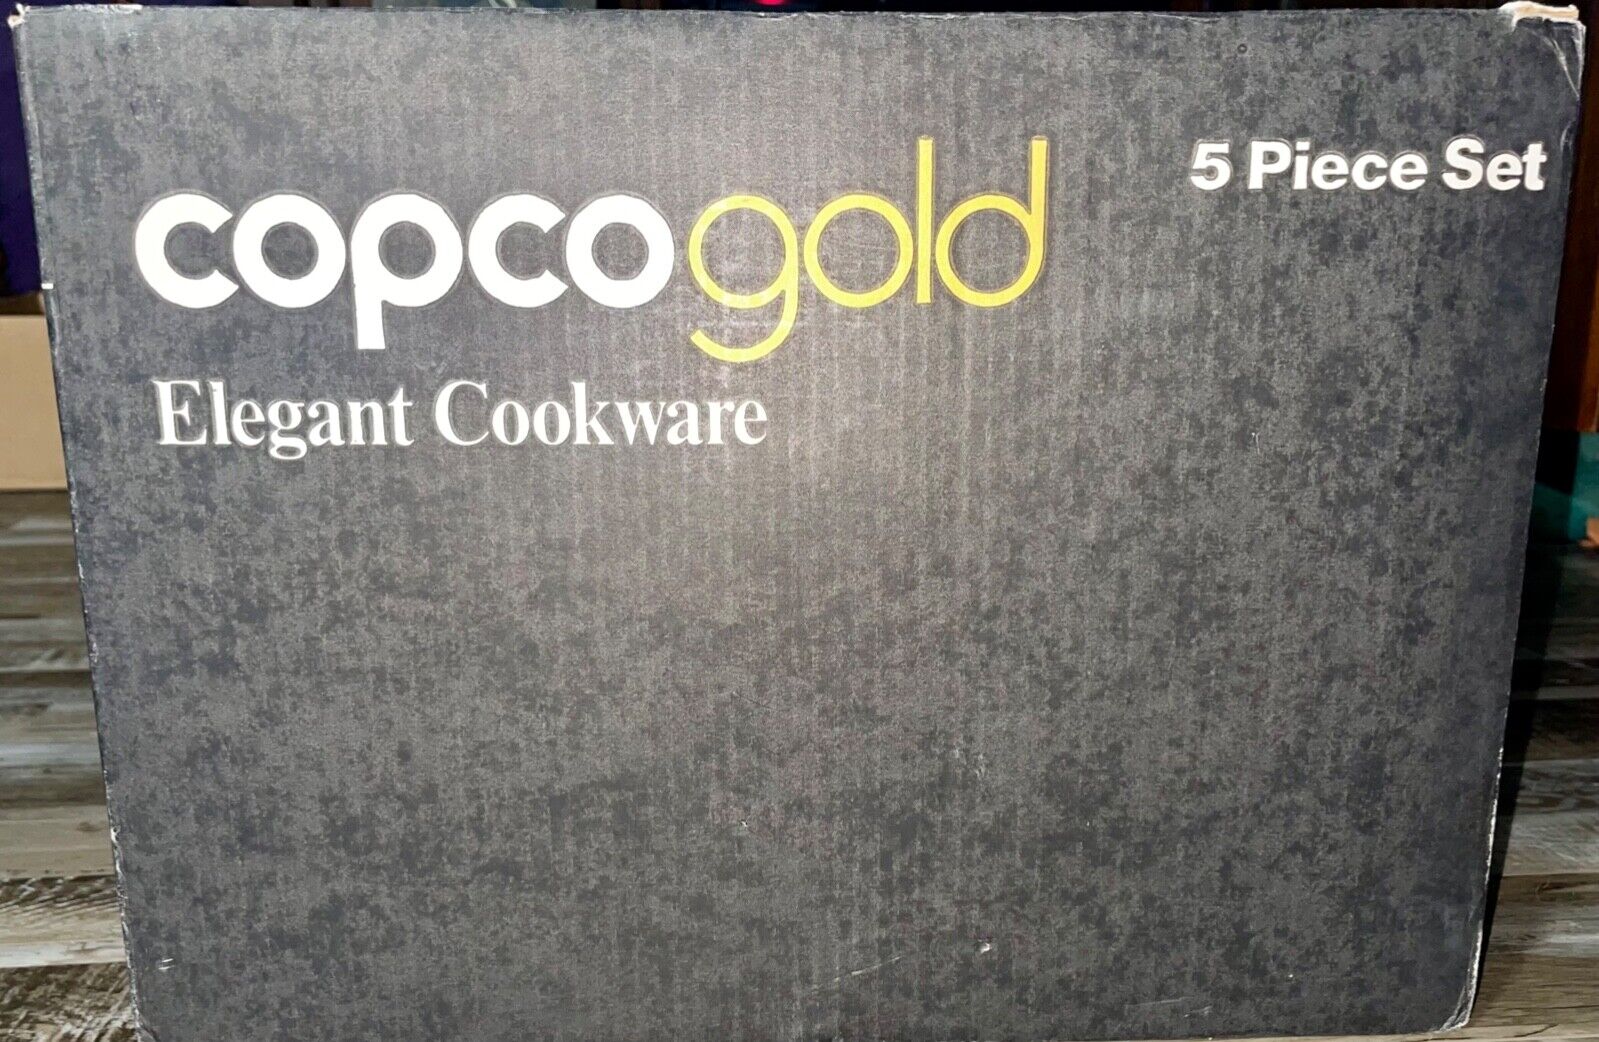 Copco Gold 5 Piece Set New